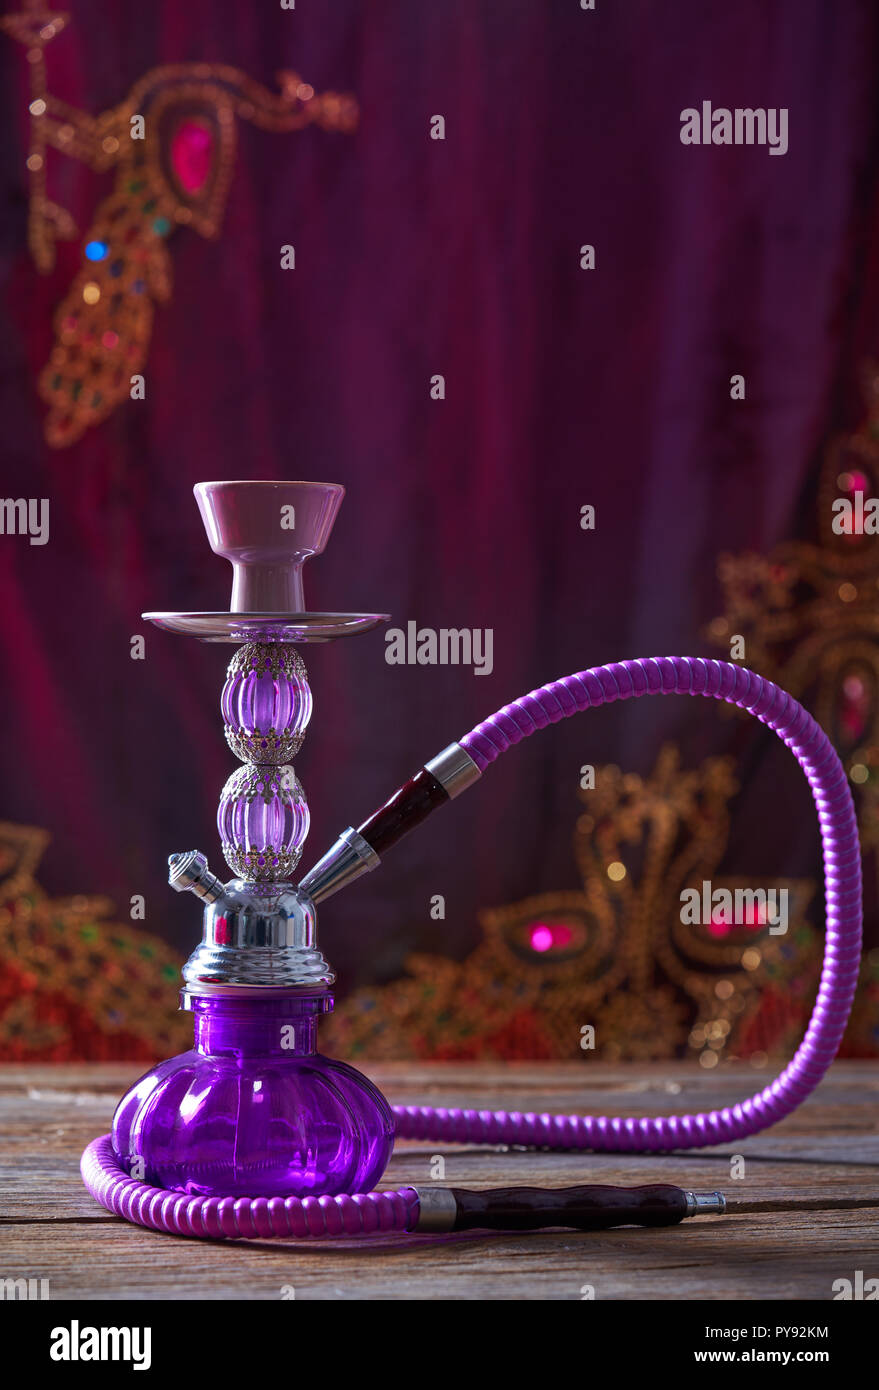 Hookah shisha viola fumo tubo di vetro Foto stock - Alamy